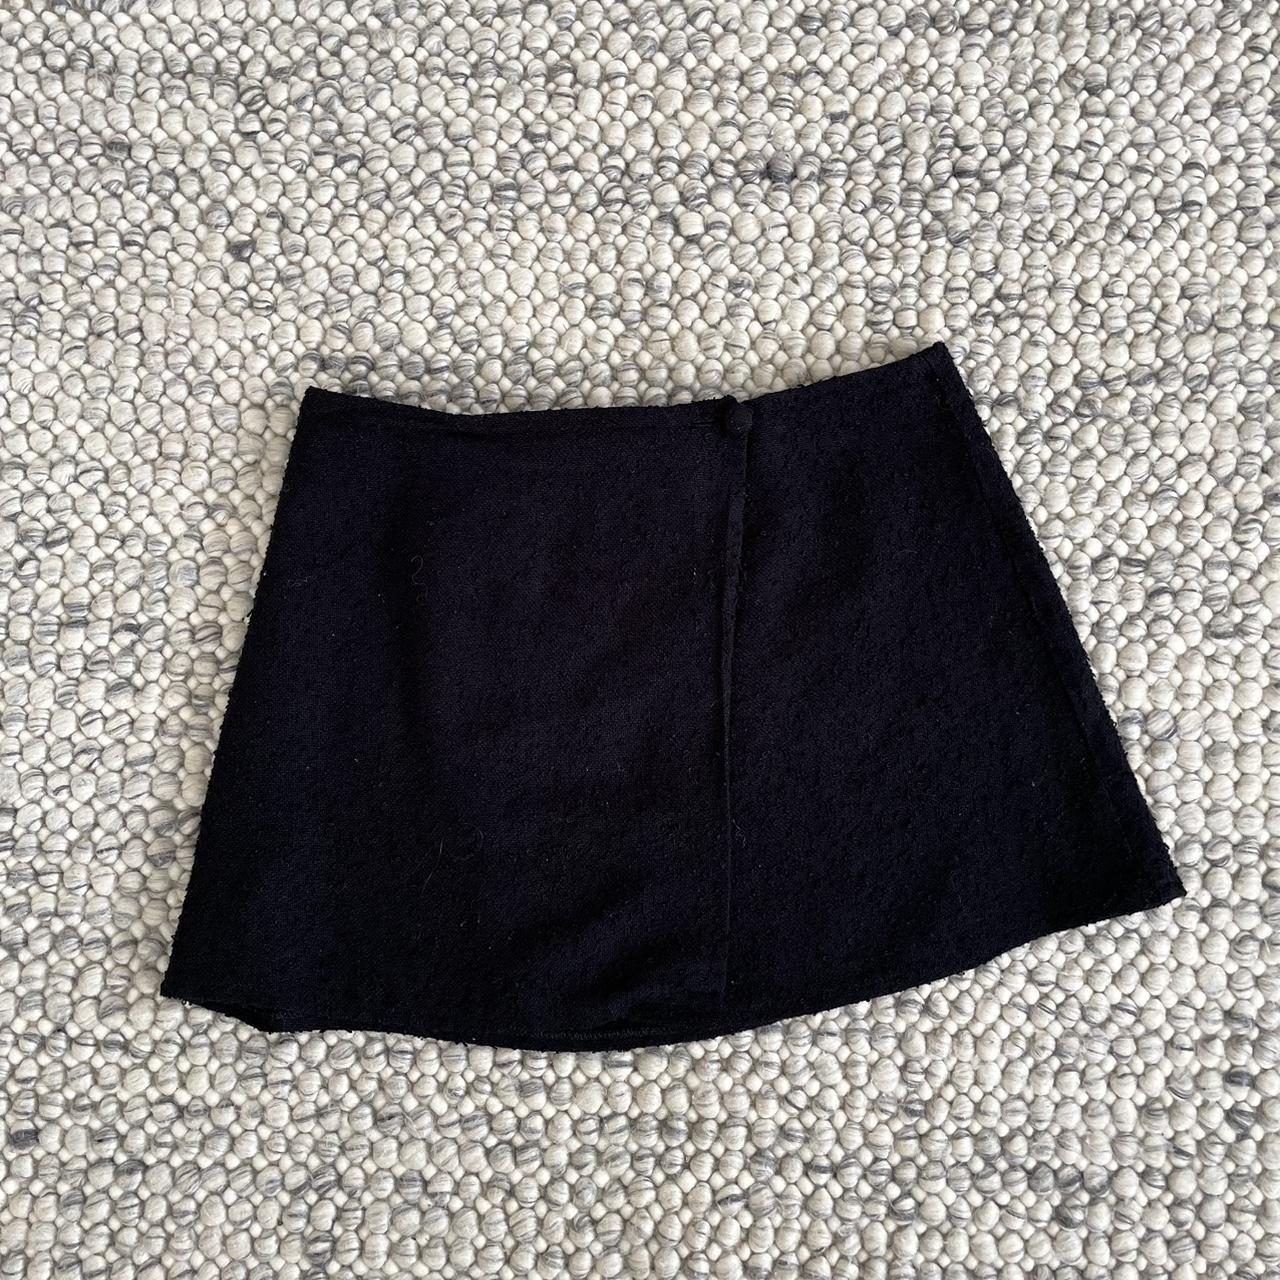 00s vintage black boucle style mini skirt made in... - Depop